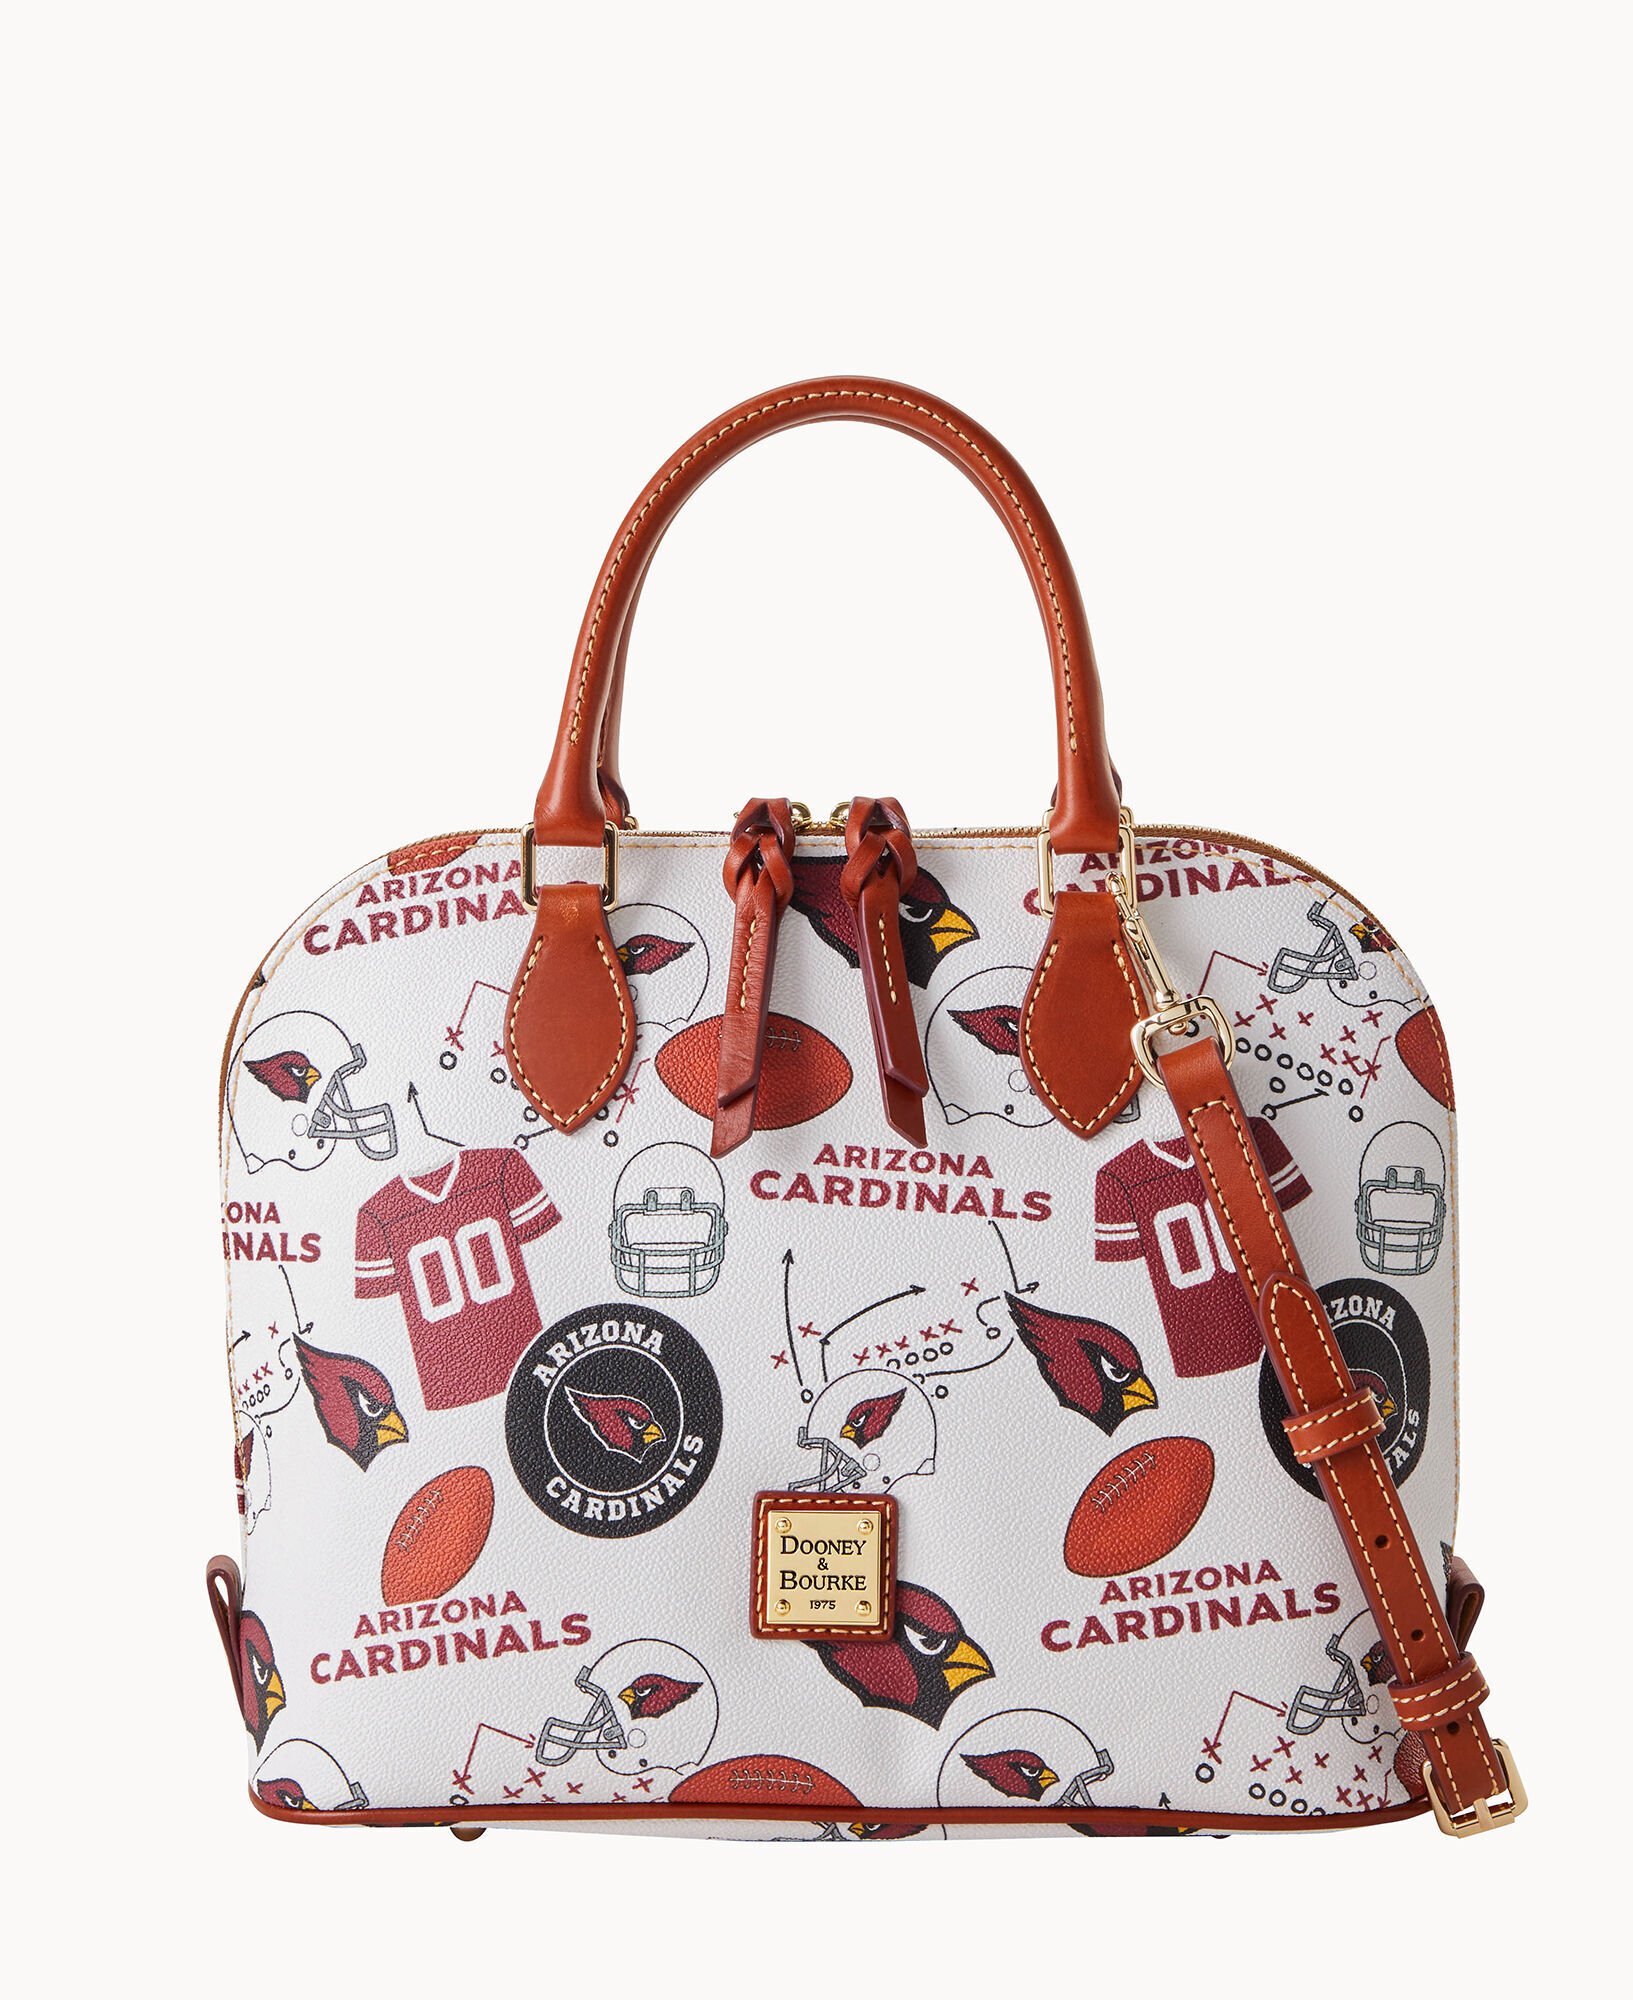 Dooney & Bourke Arizona Cardinals Drawstring Shoulder Bag